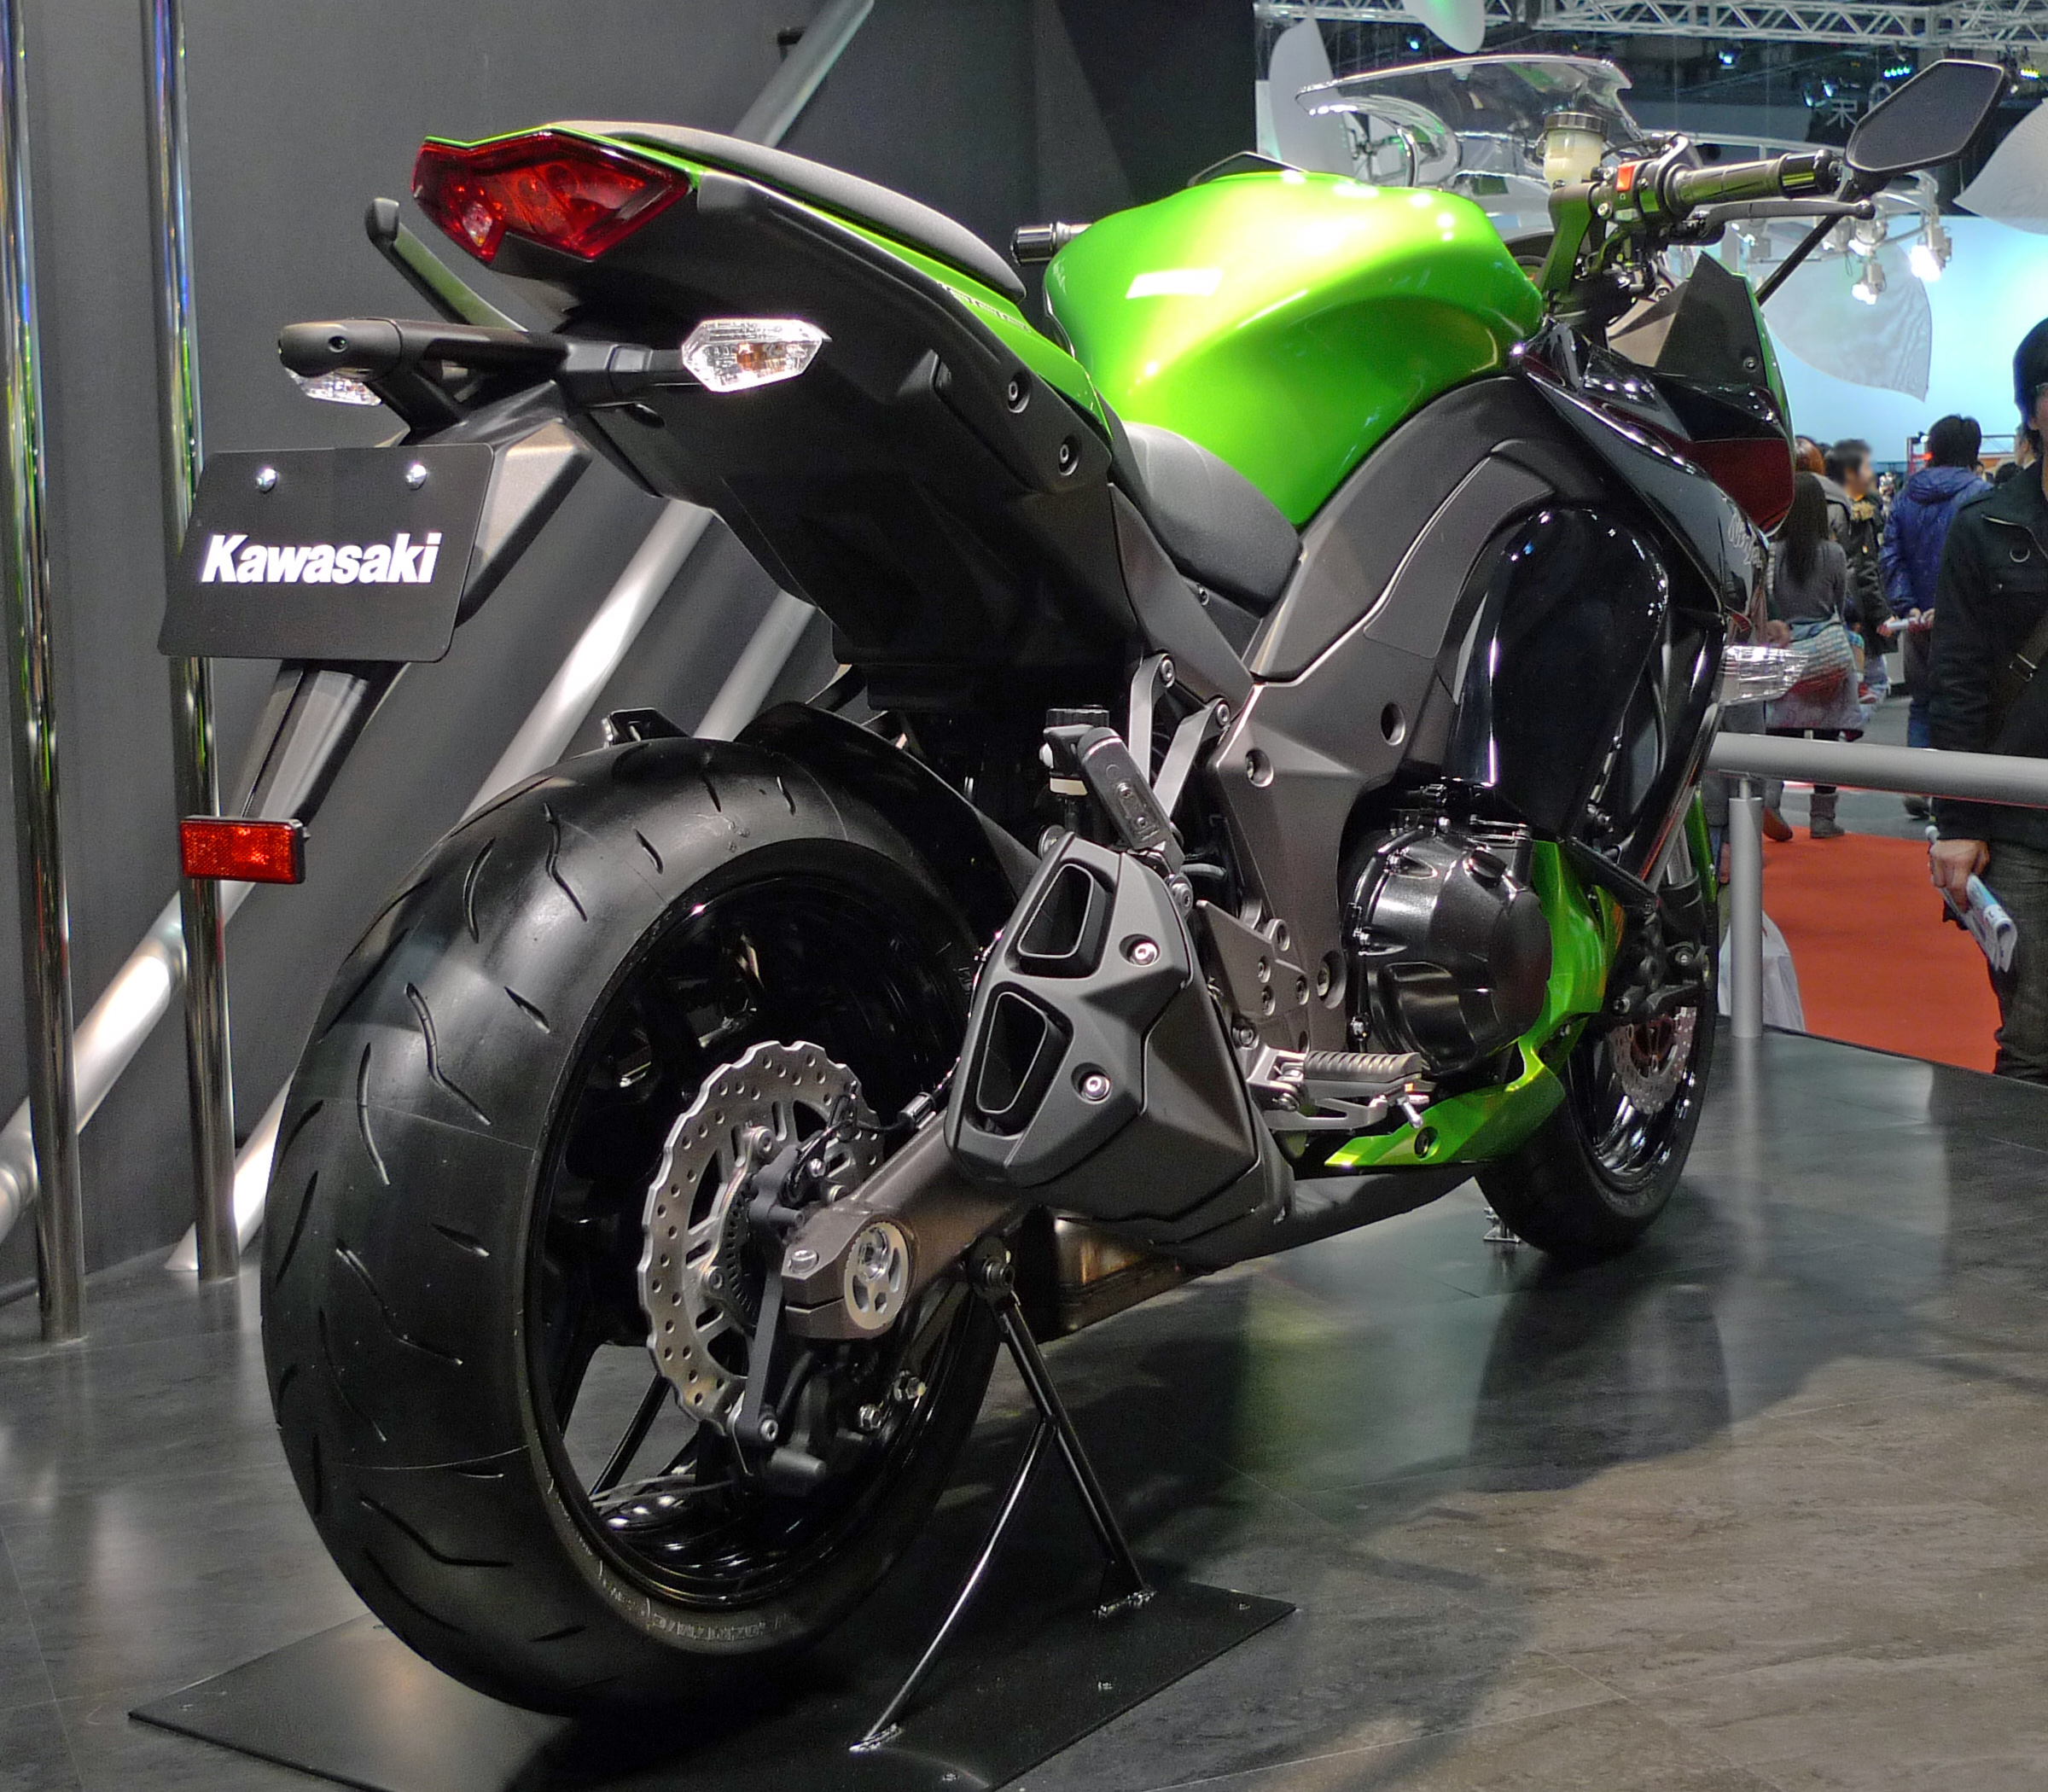 tjene spontan Eddike File:Kawasaki Ninja 1000 ABS right-rear2 2011 Tokyo Motor Show.jpg -  Wikimedia Commons